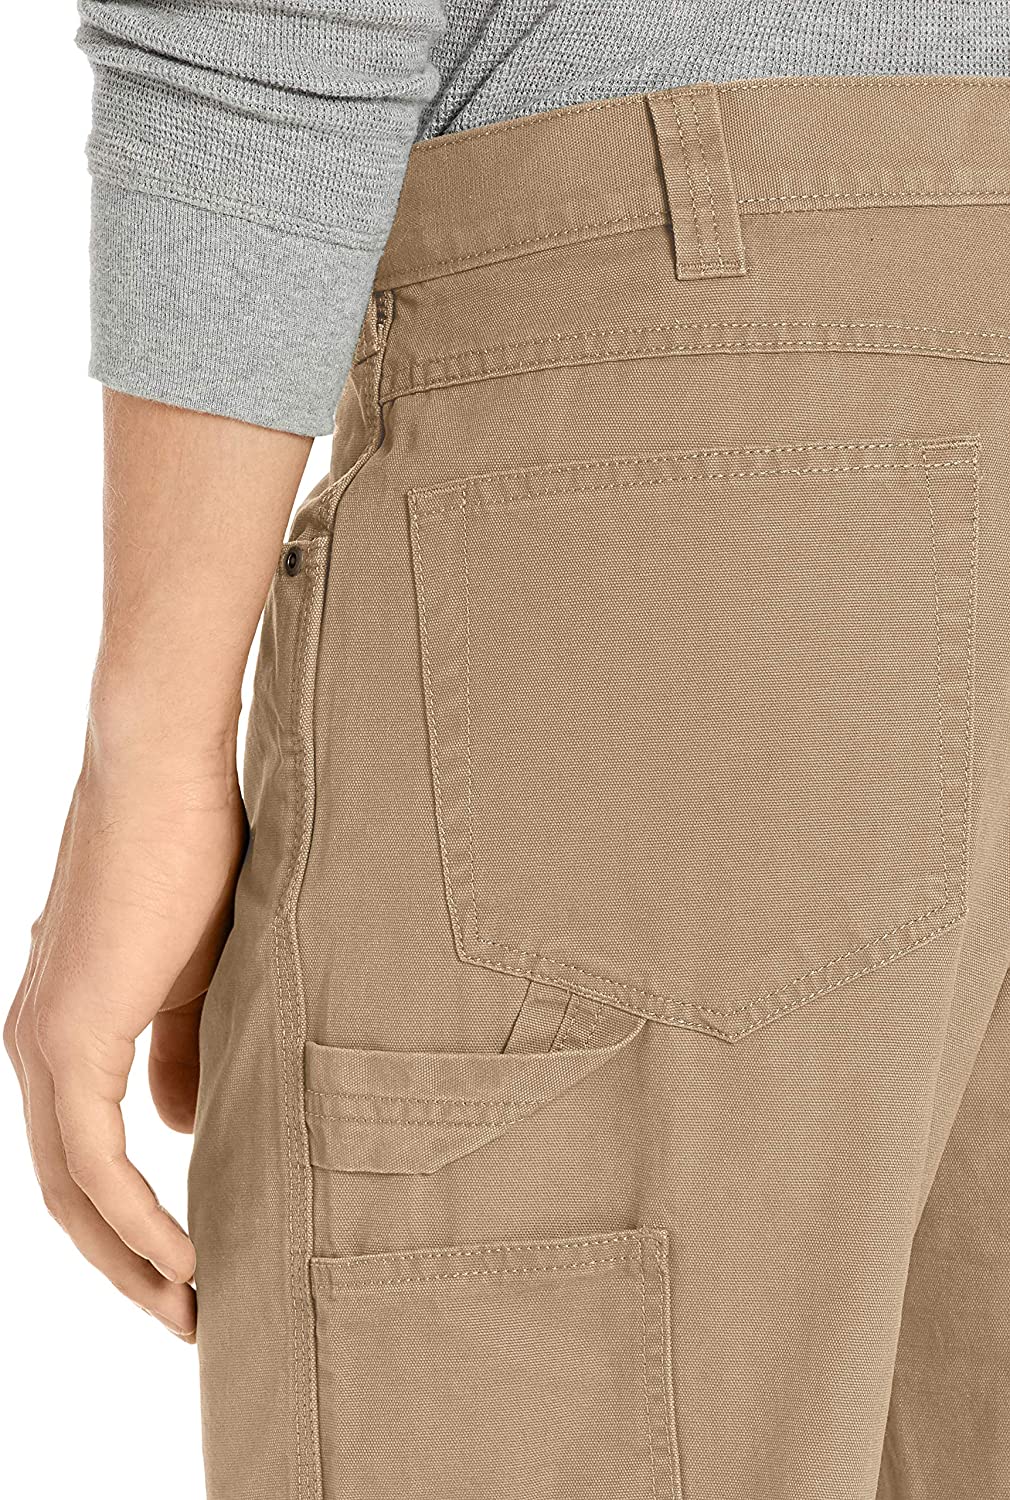 Essentials Men's Carpenter Jean with Tool Pockets, Khaki, Size 29W x ...